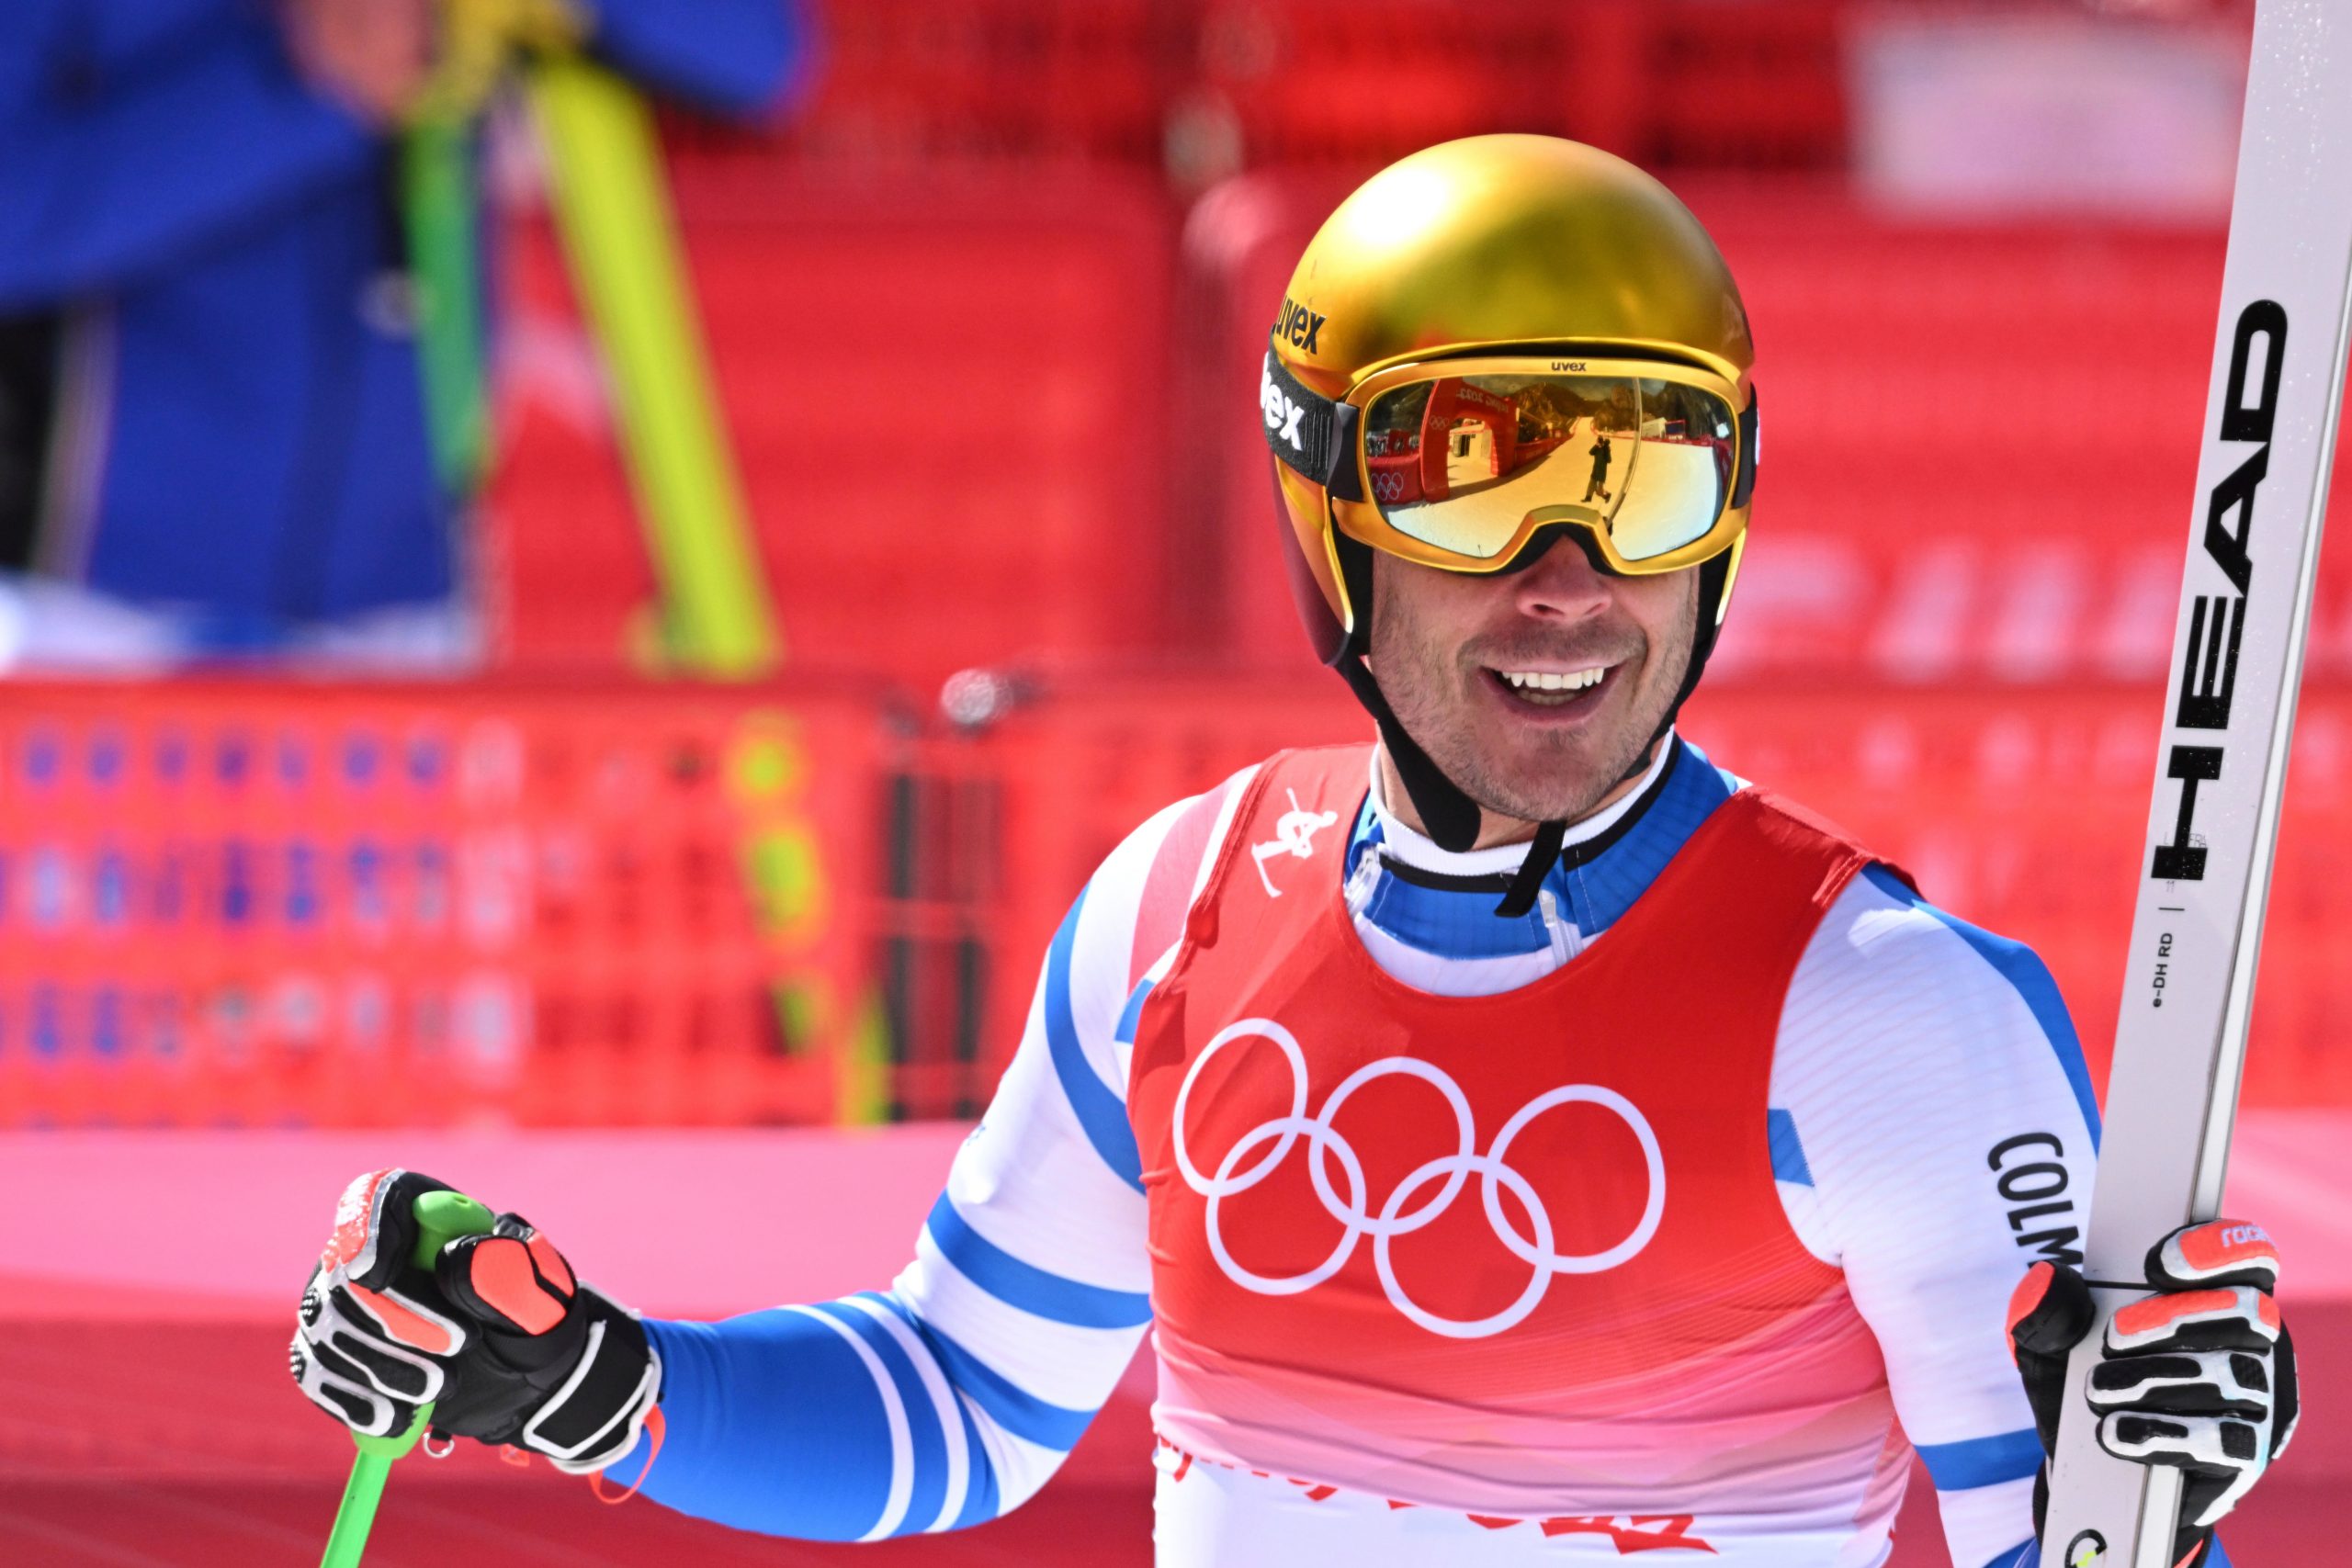 Winter Olympics: Johan Clarey creates history winning medal at 41